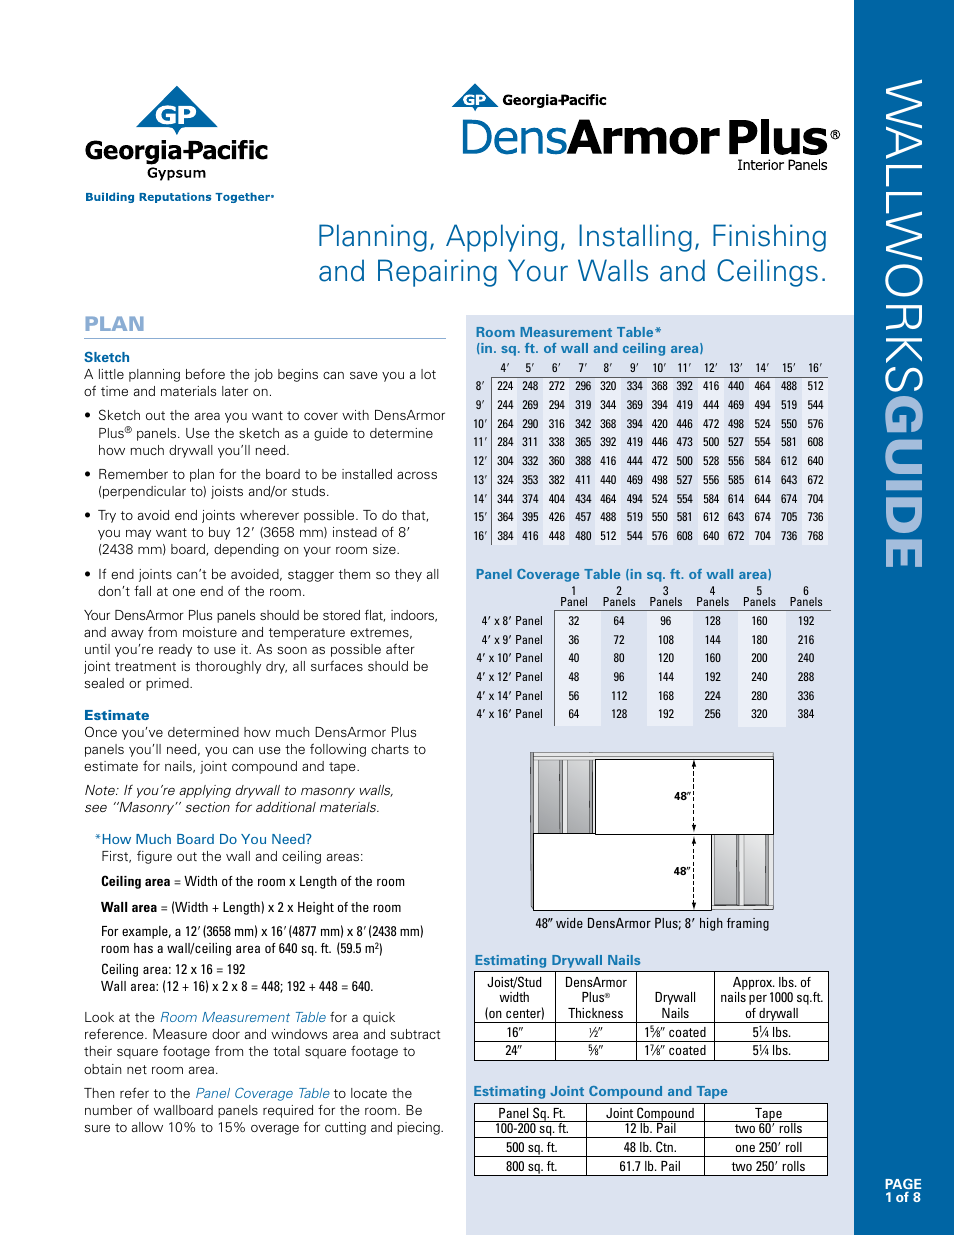 Georgia-Pacific DensArmor Plus Interior Panels User Manual | 8 pages